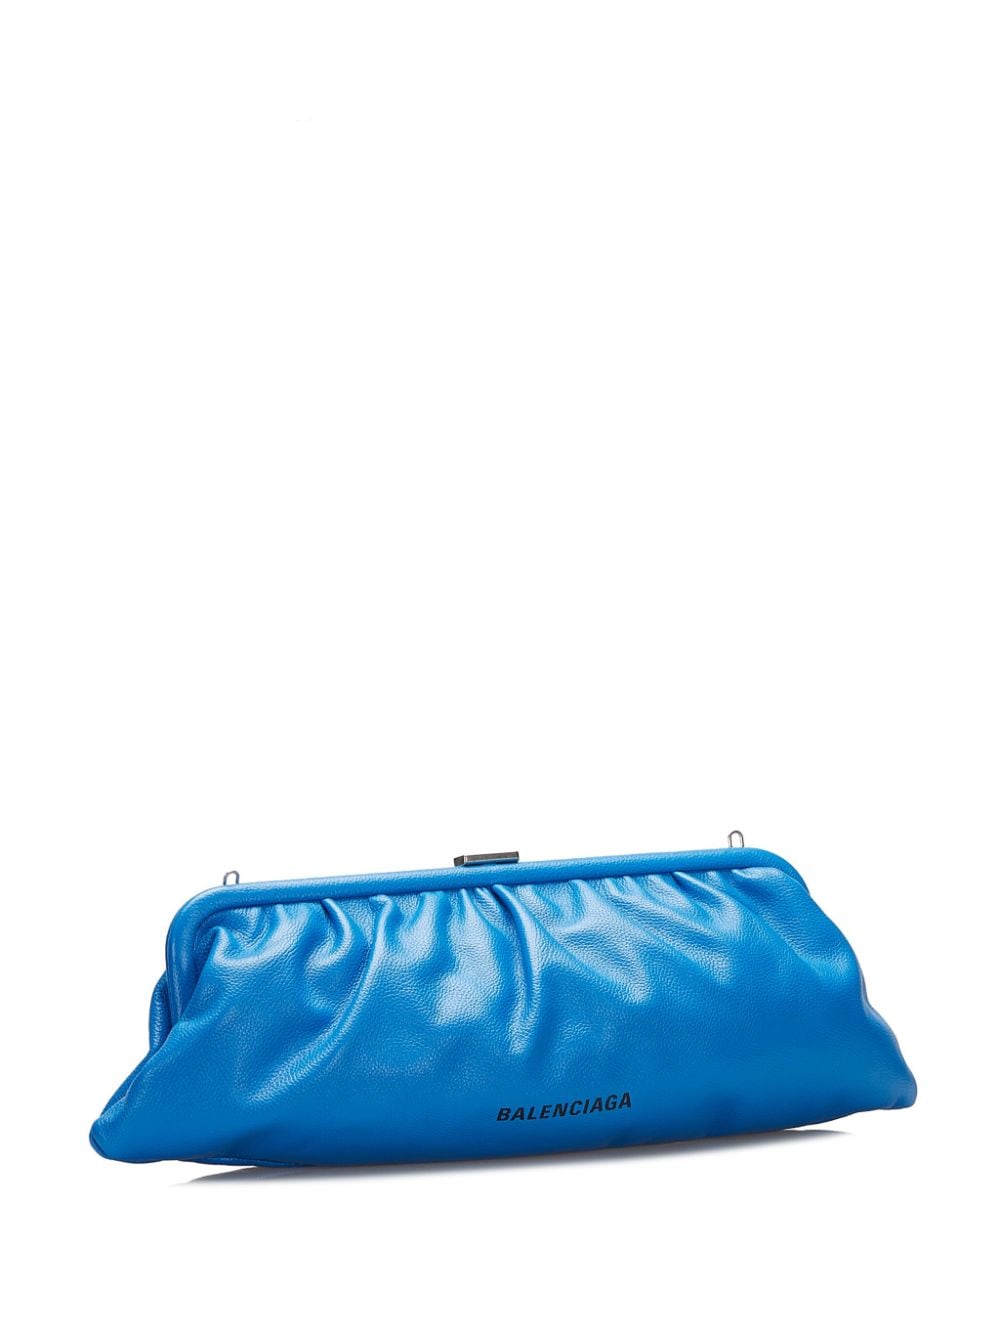 Pre-owned Balenciaga 2009 Xl Cloud Leather Clutch Bag In Blue